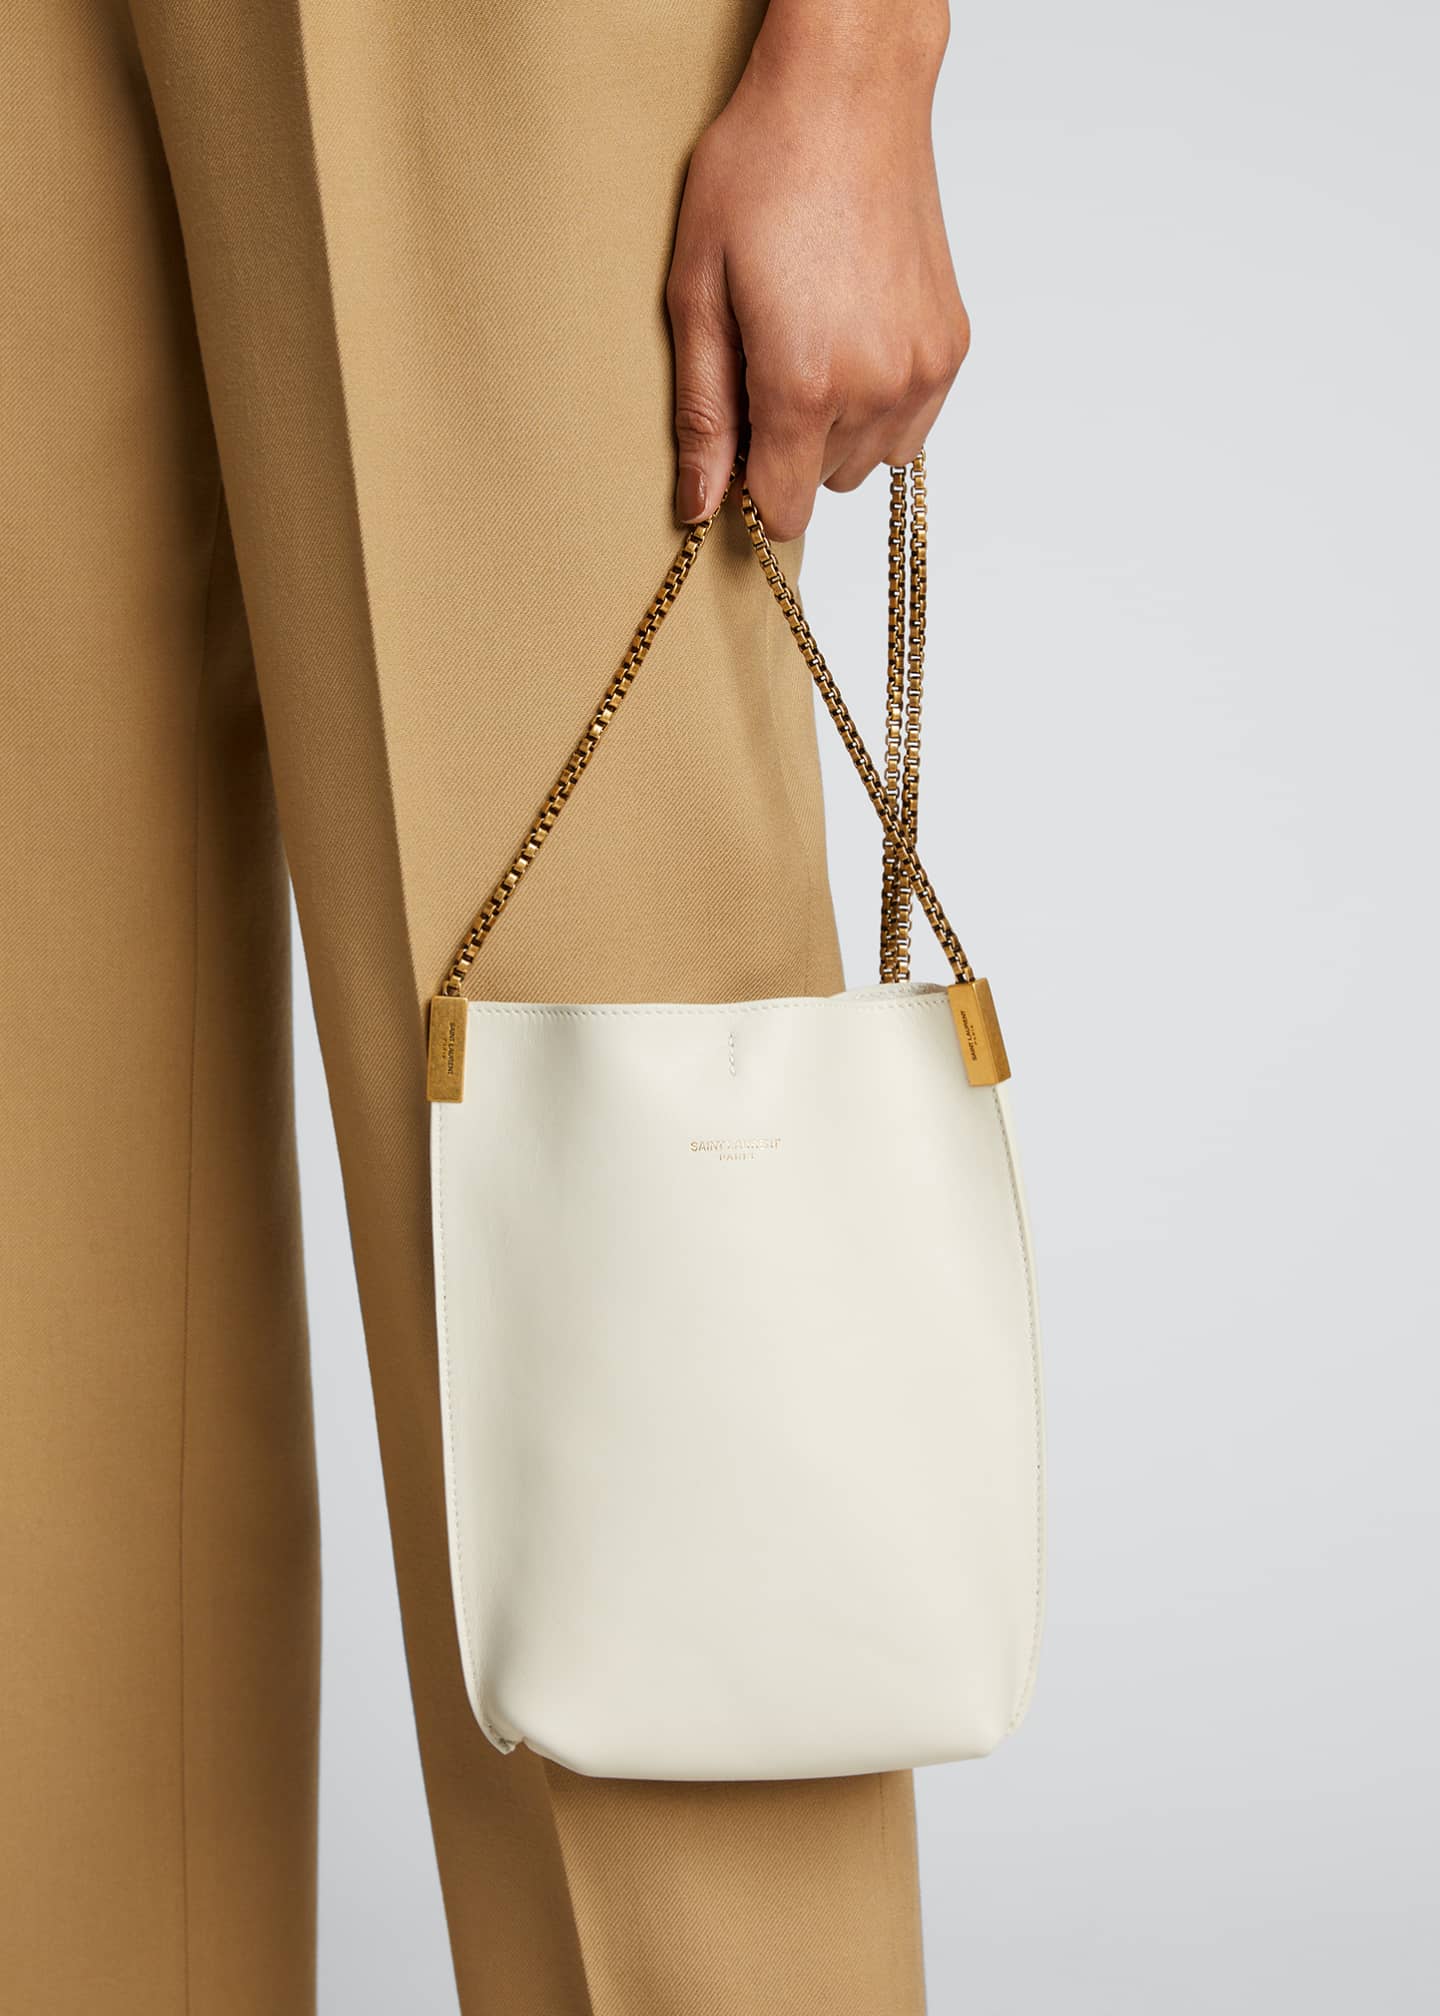 Saint Laurent Suzanne Mini Leather Hobo Bag - Bergdorf Goodman